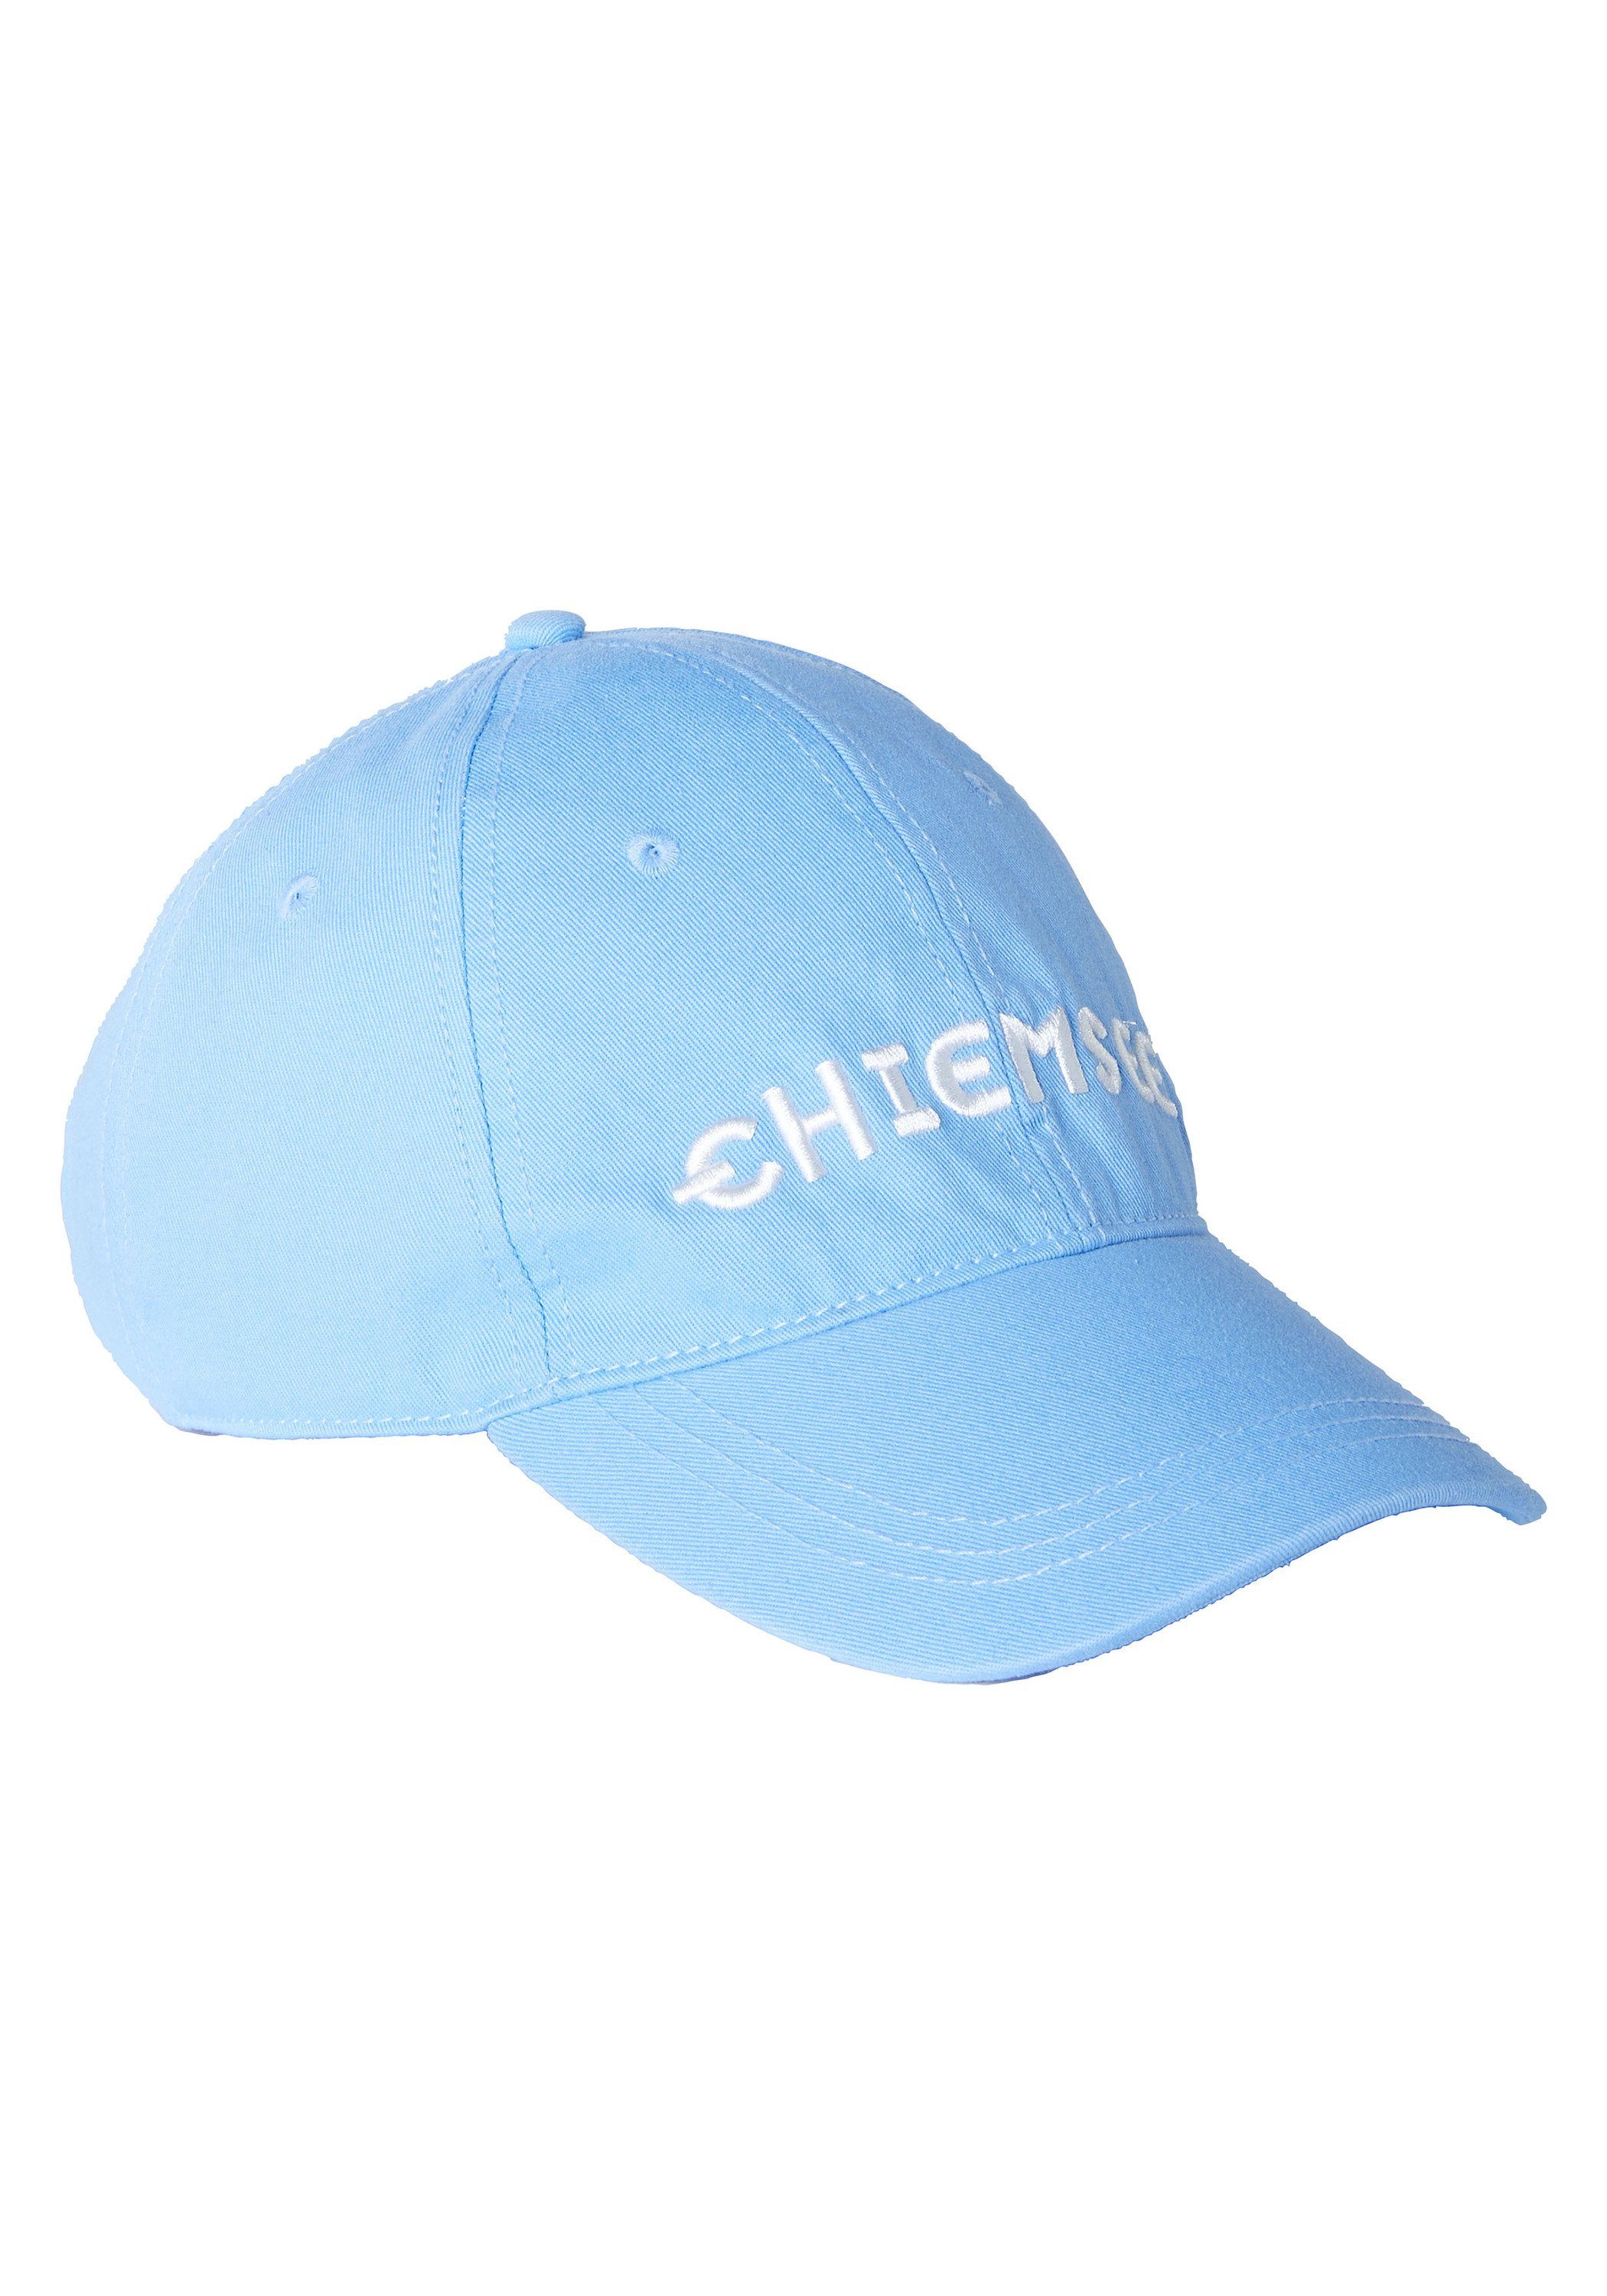 Logo aus mit Chiemsee Baumwolle Blue Sky Cap Cap Unisex 1 Baseball